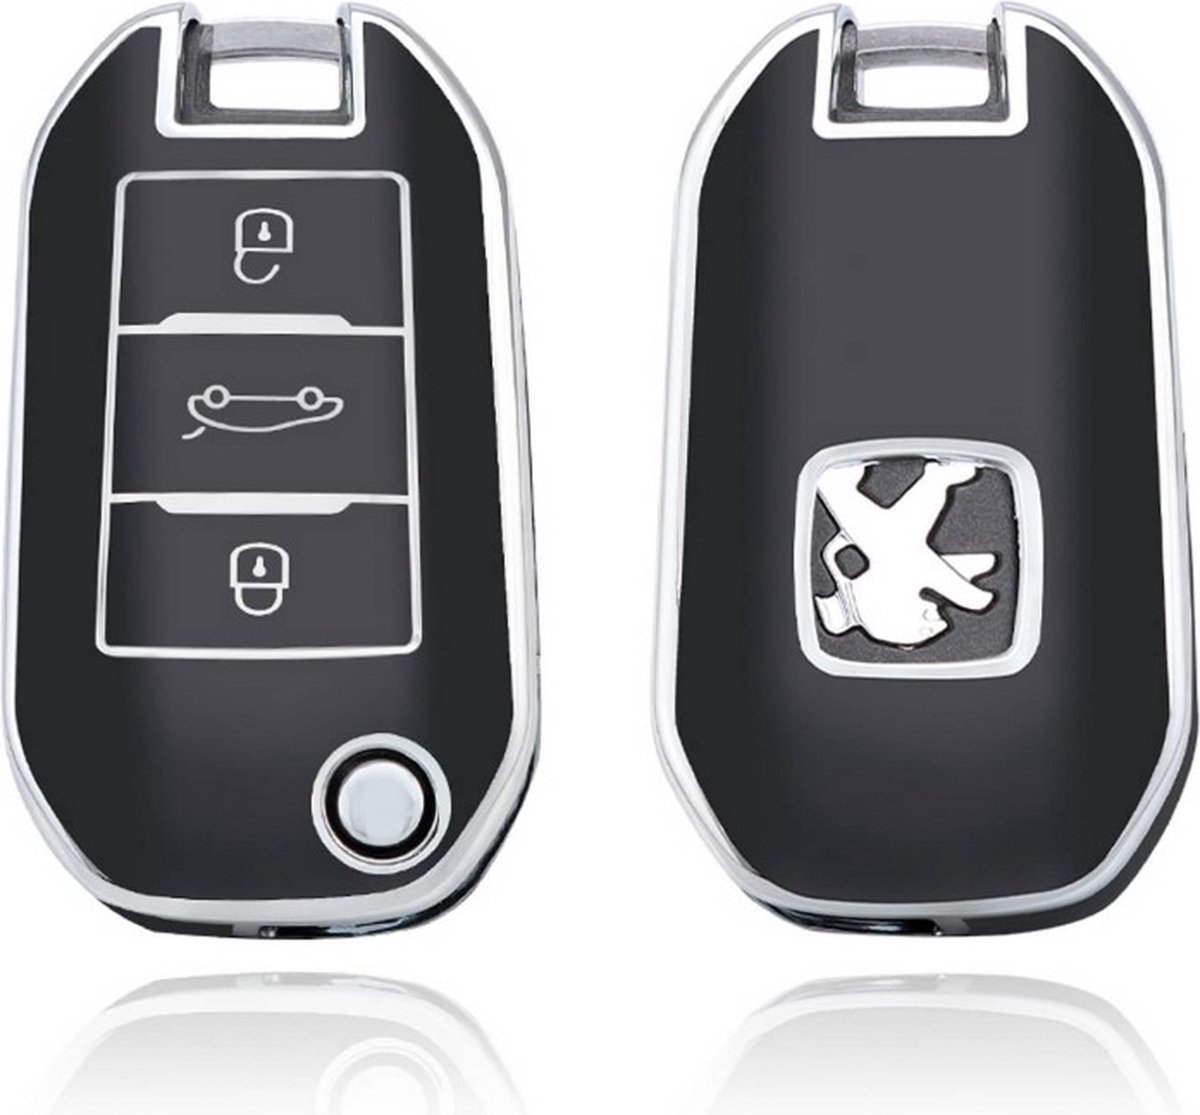 Schlüsselhülle Peugeot- 3 Tasten - Material Weichgummimaterial